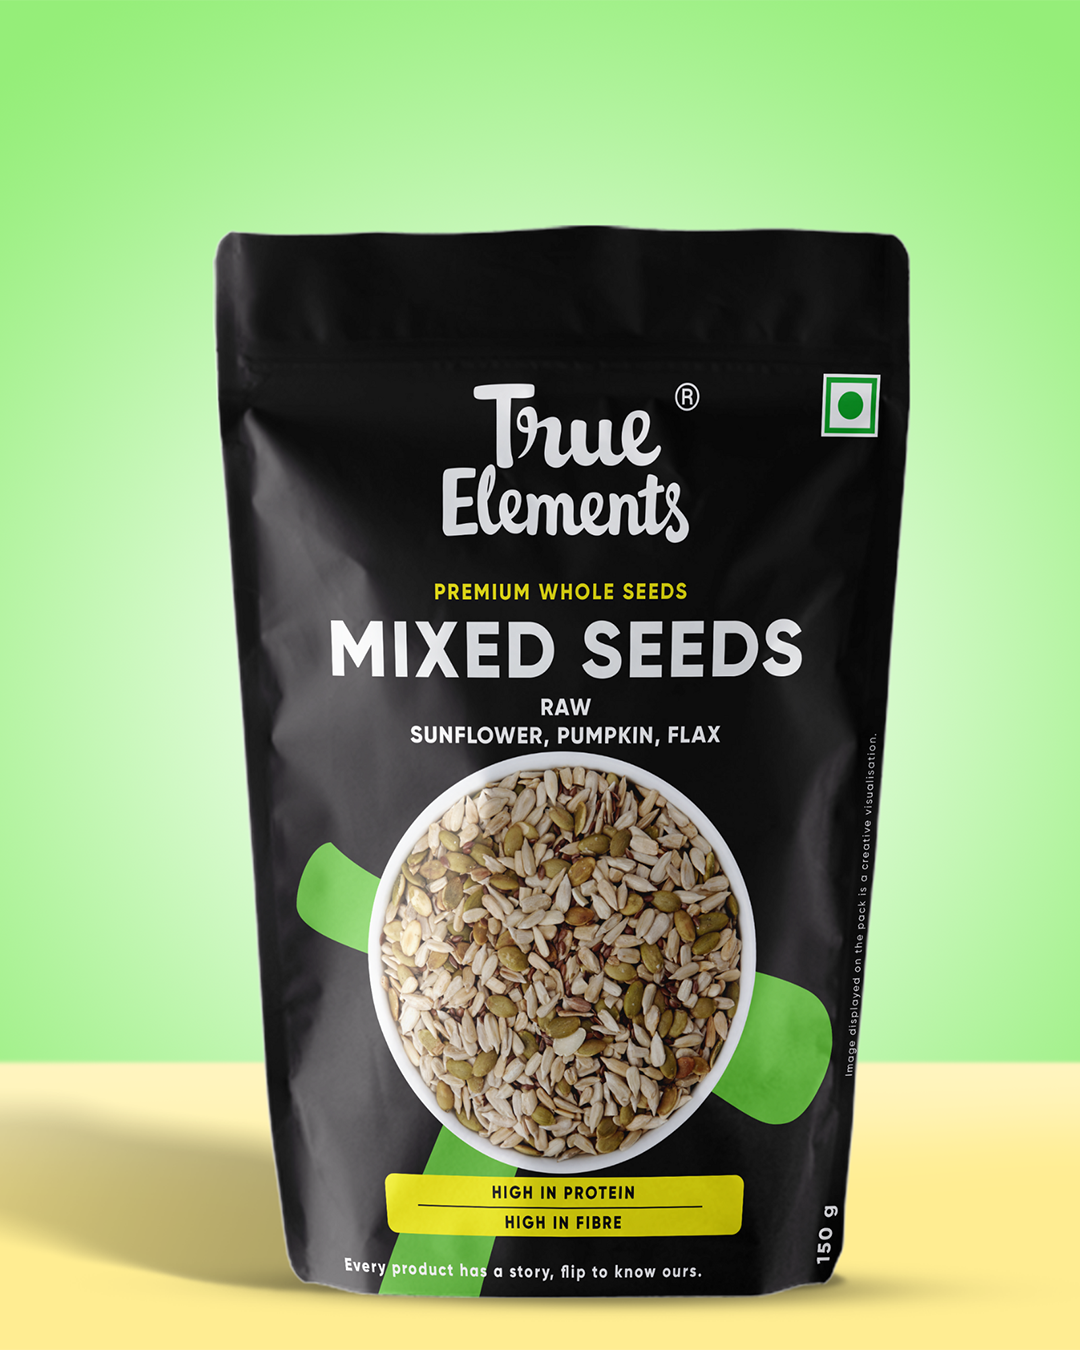 True elements raw mixed seeds (Sunflower, Pumpkin & Flax) 150g Pouch (Premium Whole Seeds)